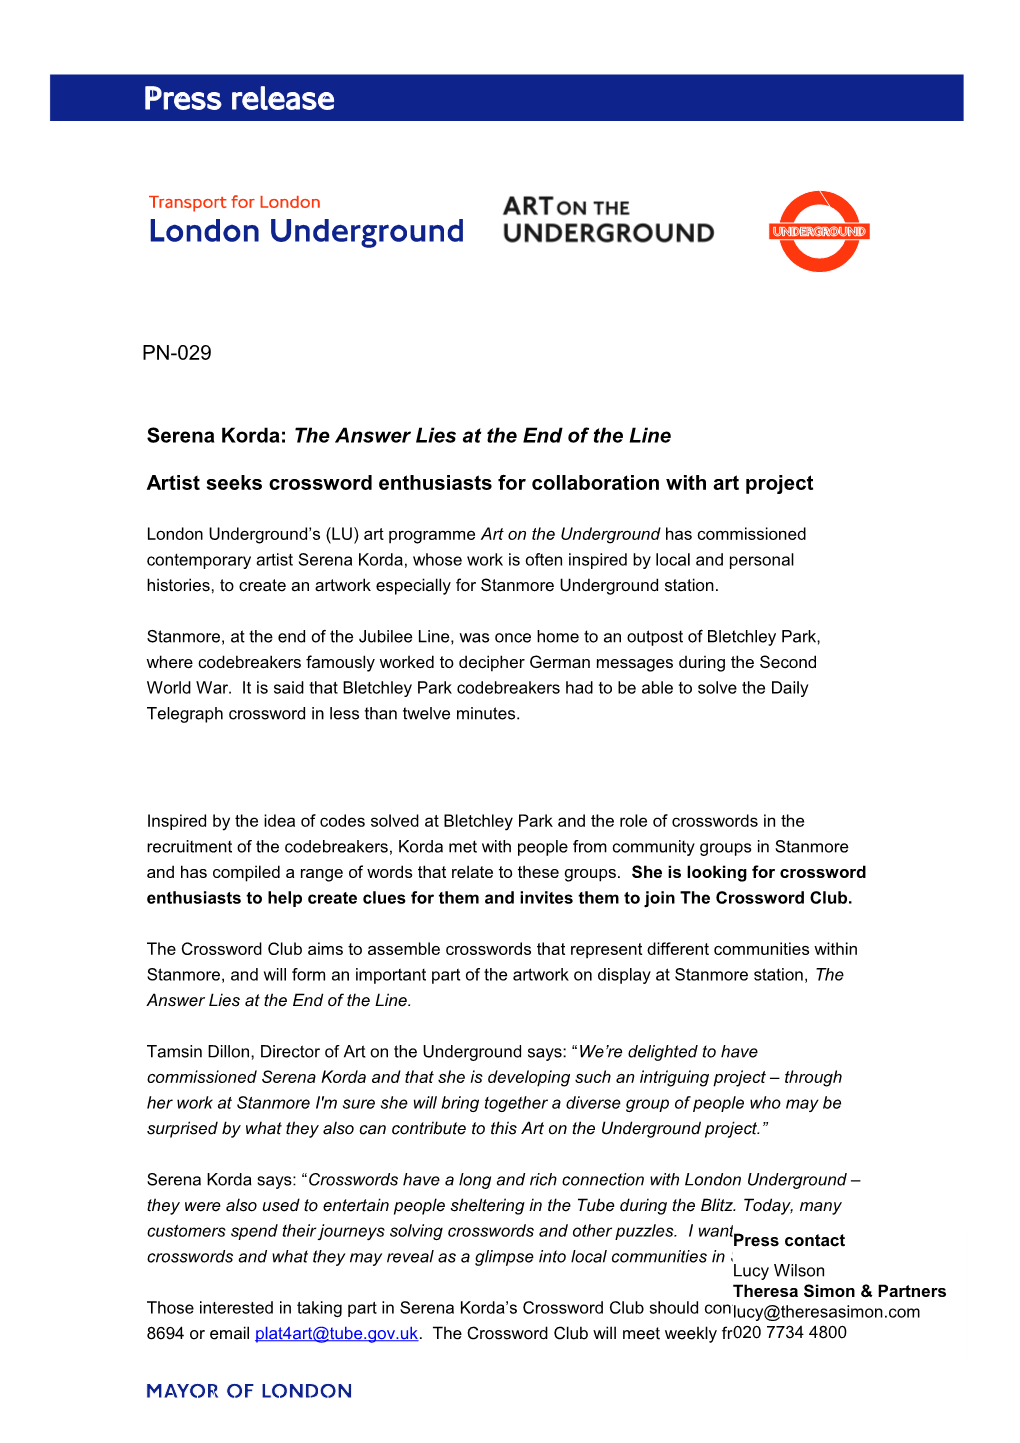 Transport for London Press Release